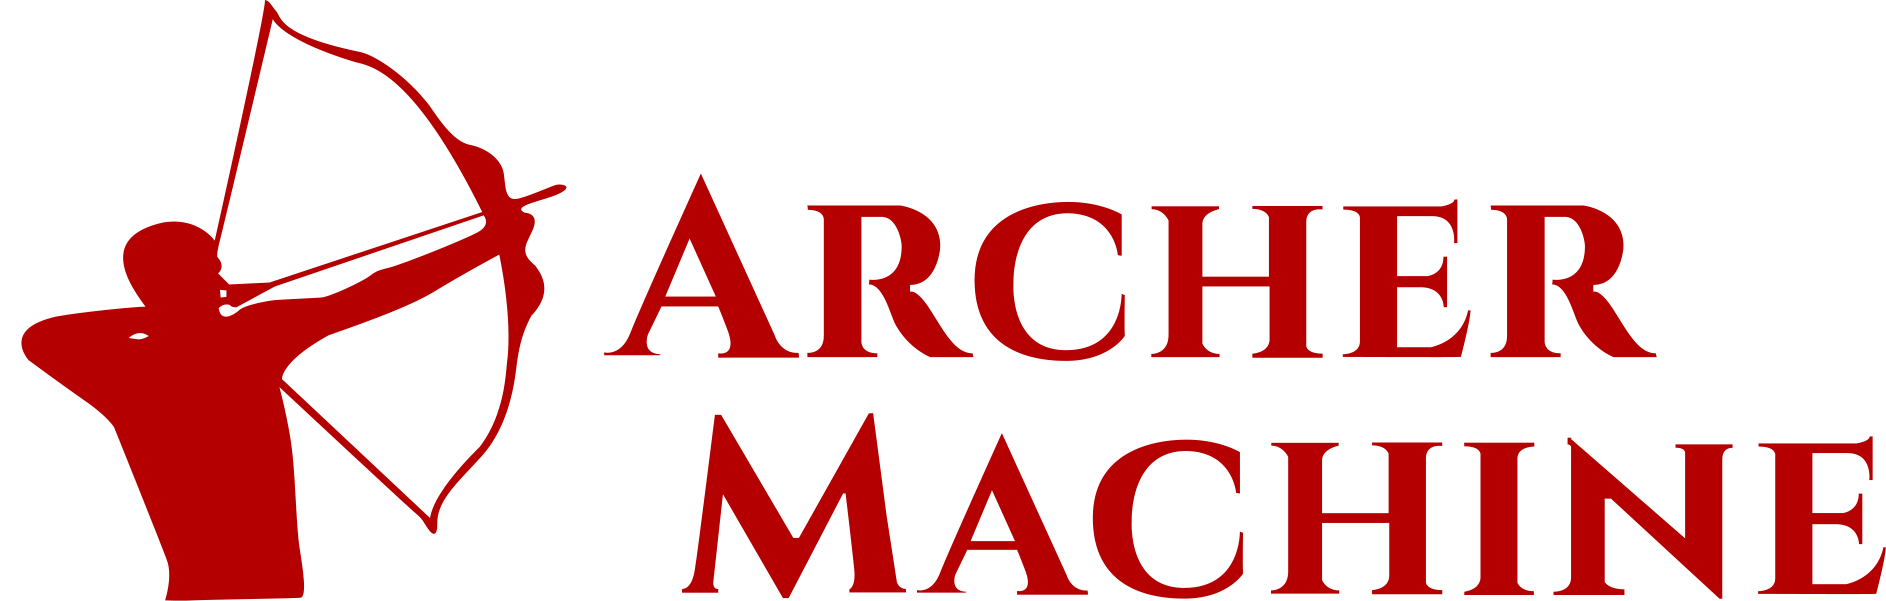 Red Archer Logo - CNC Machining Services. Precision Machine Shop